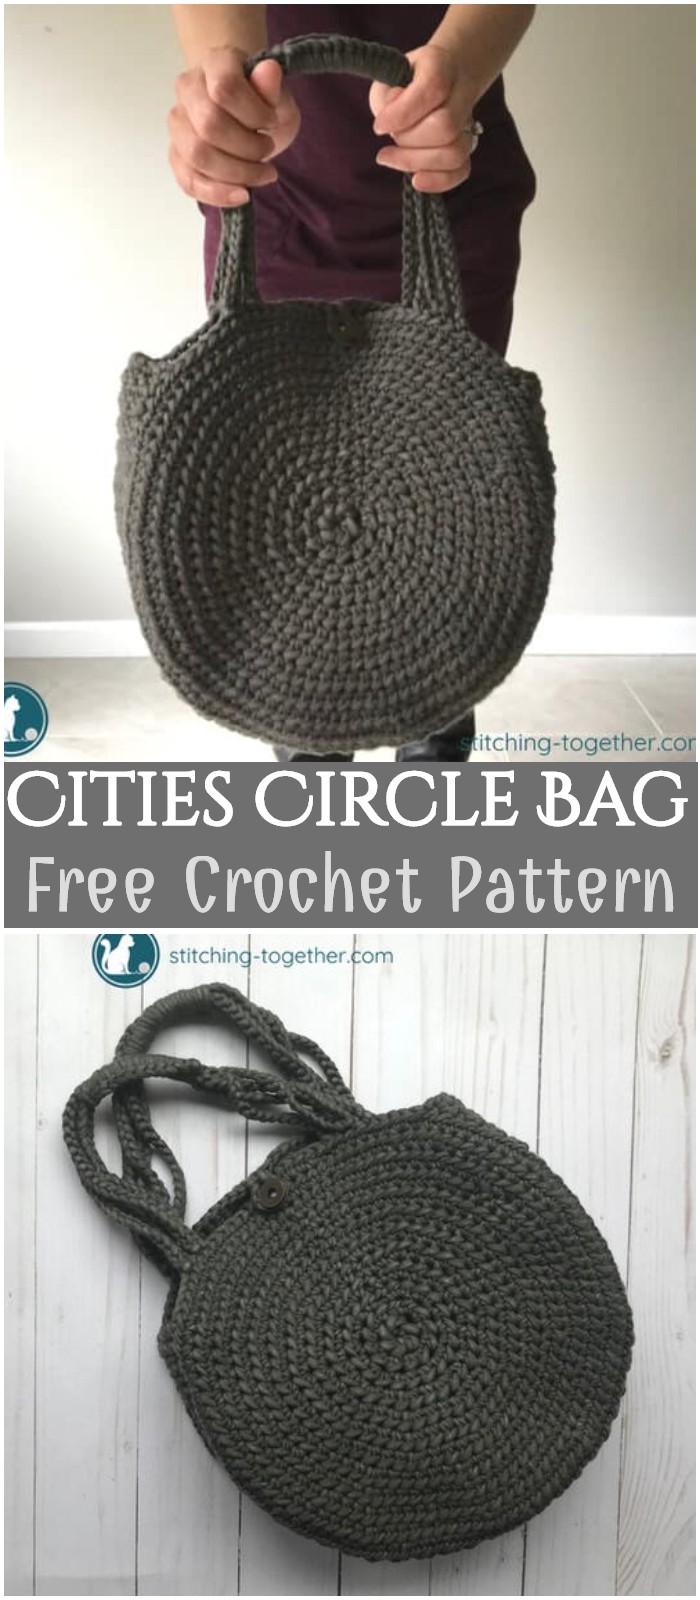 Crochet Cities Circle Bag